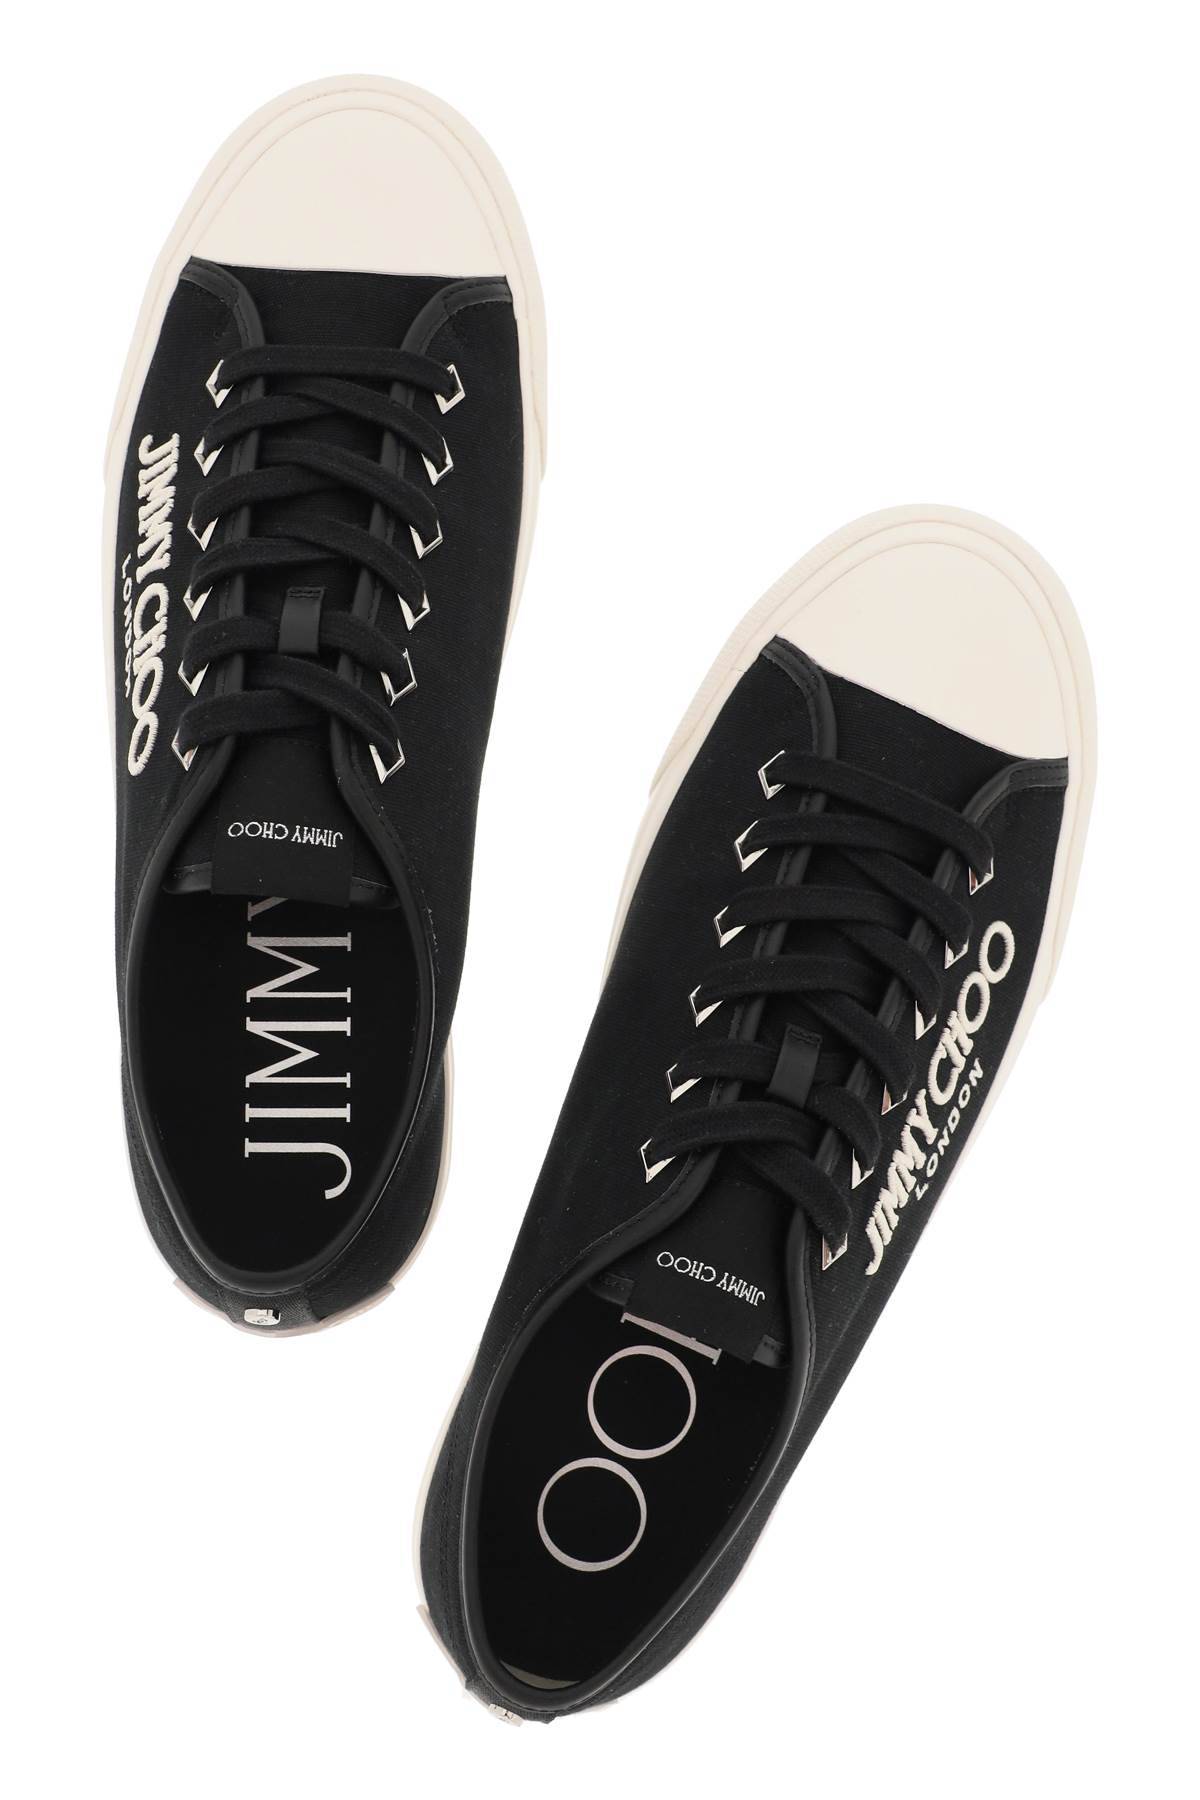 Shop Jimmy Choo Palma Maxi Sneakers In Black